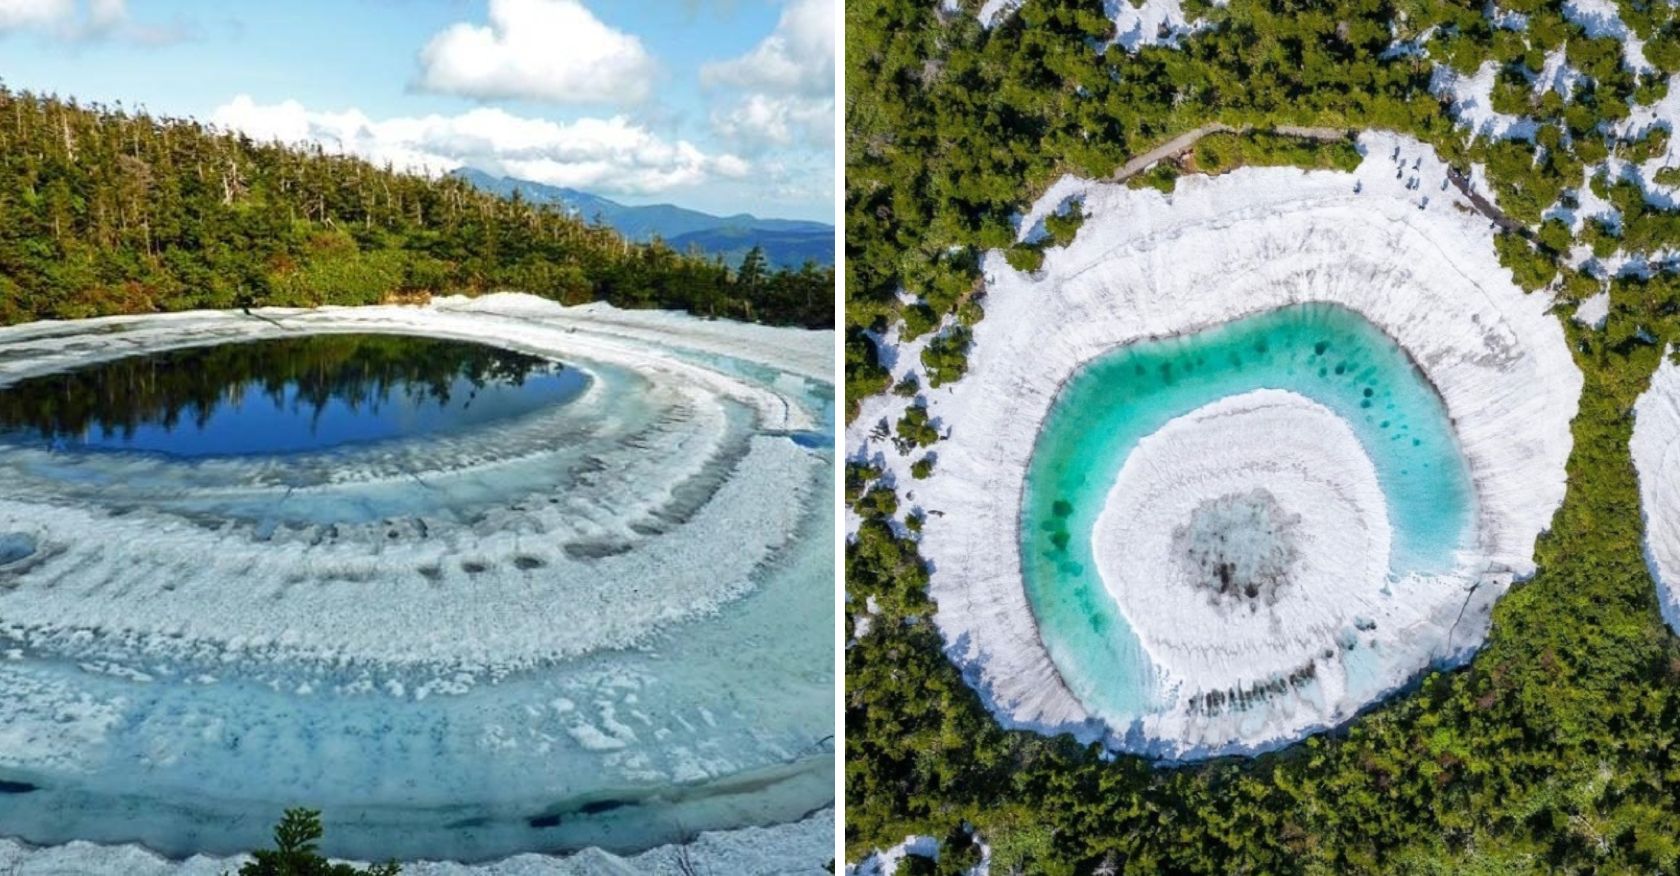 Kagami-numa: Japan's Enchanting Lake Resembling the Eye of a Dragon